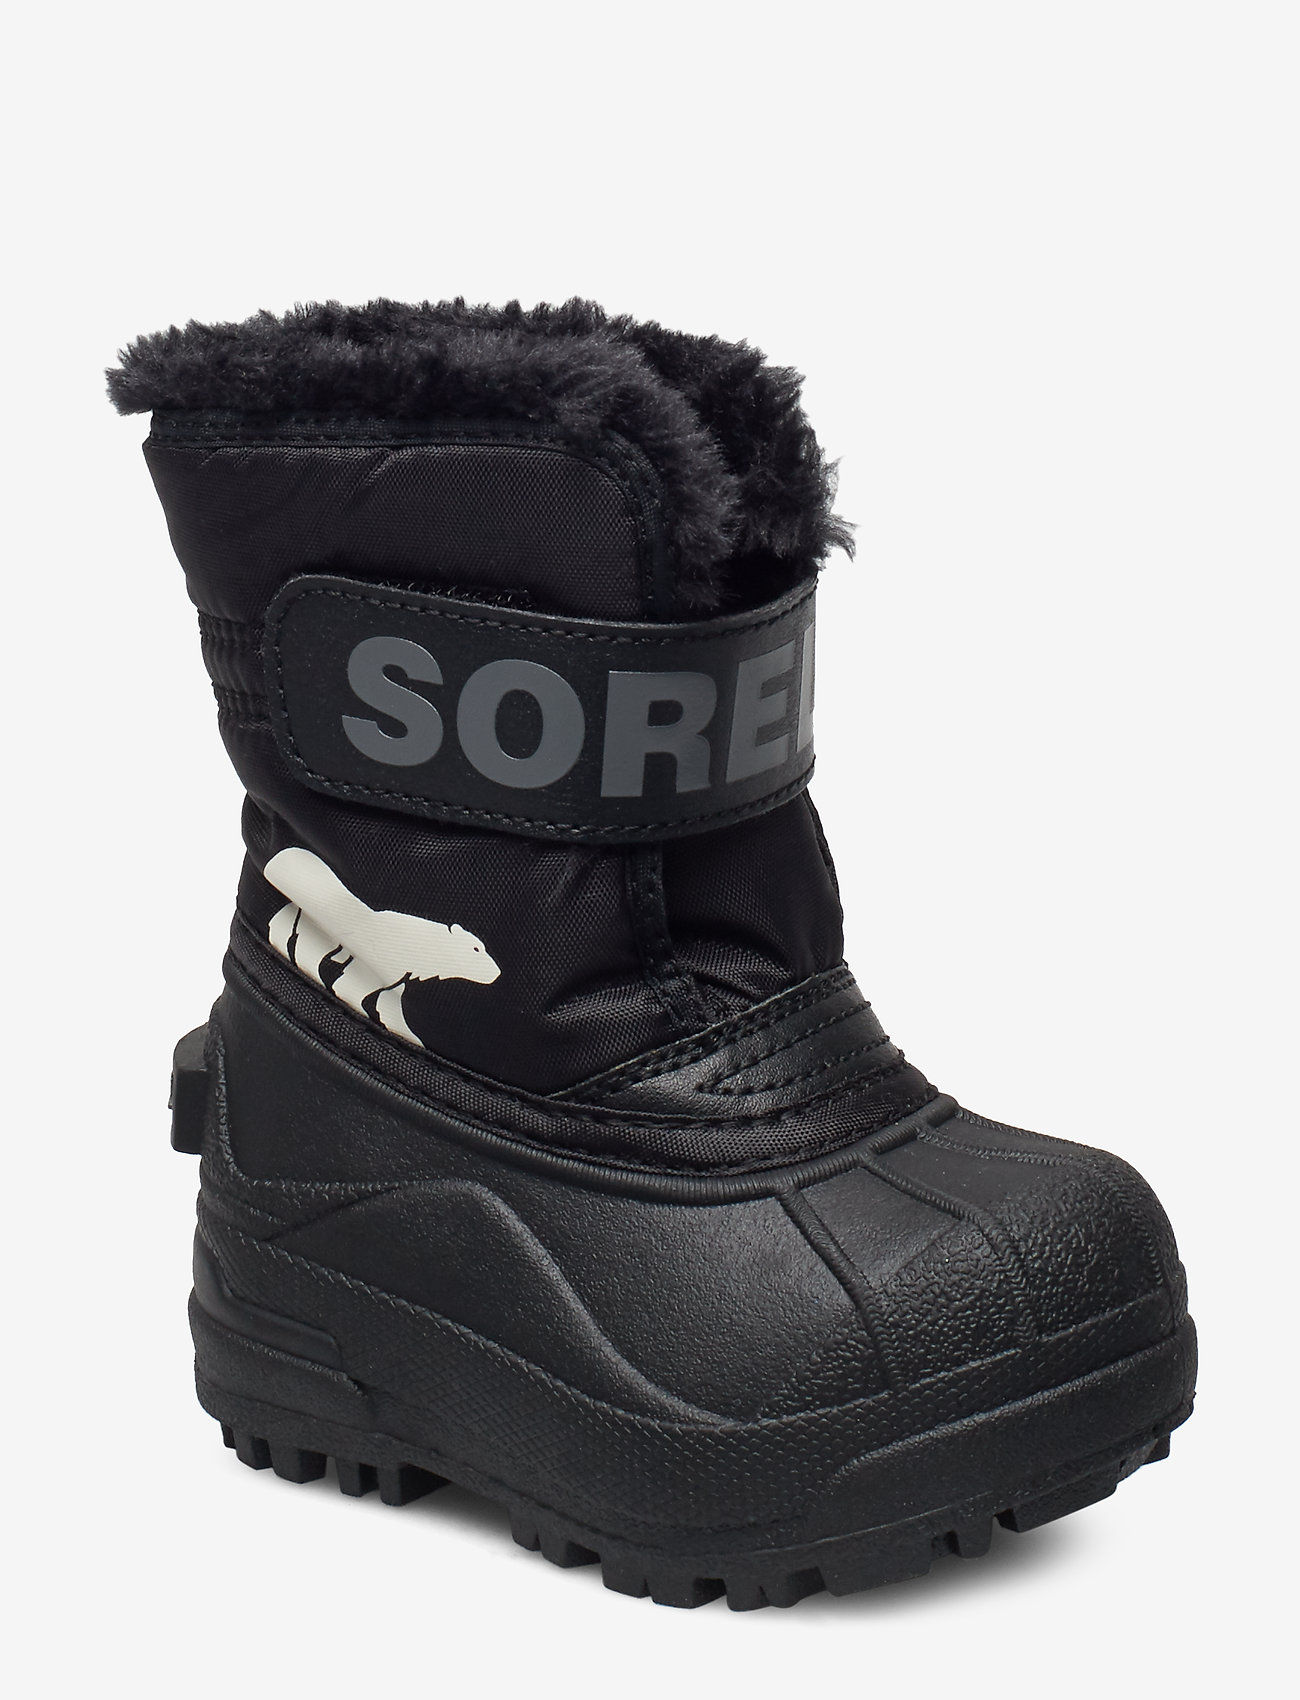 sorel snow commander childrens winter boot